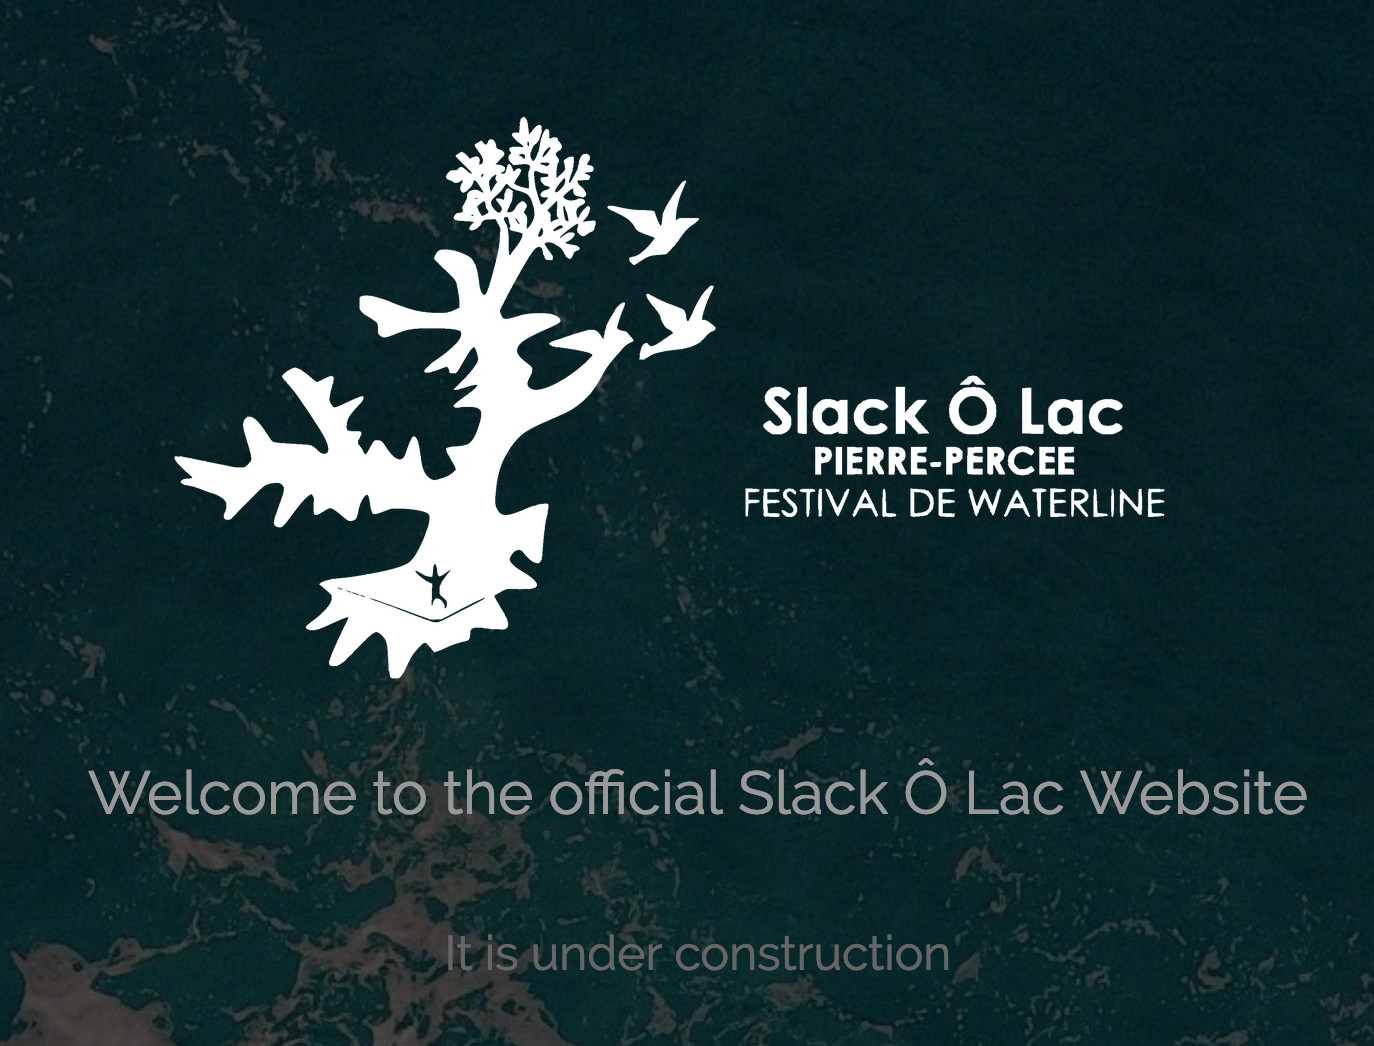 Festival de waterline slackolac